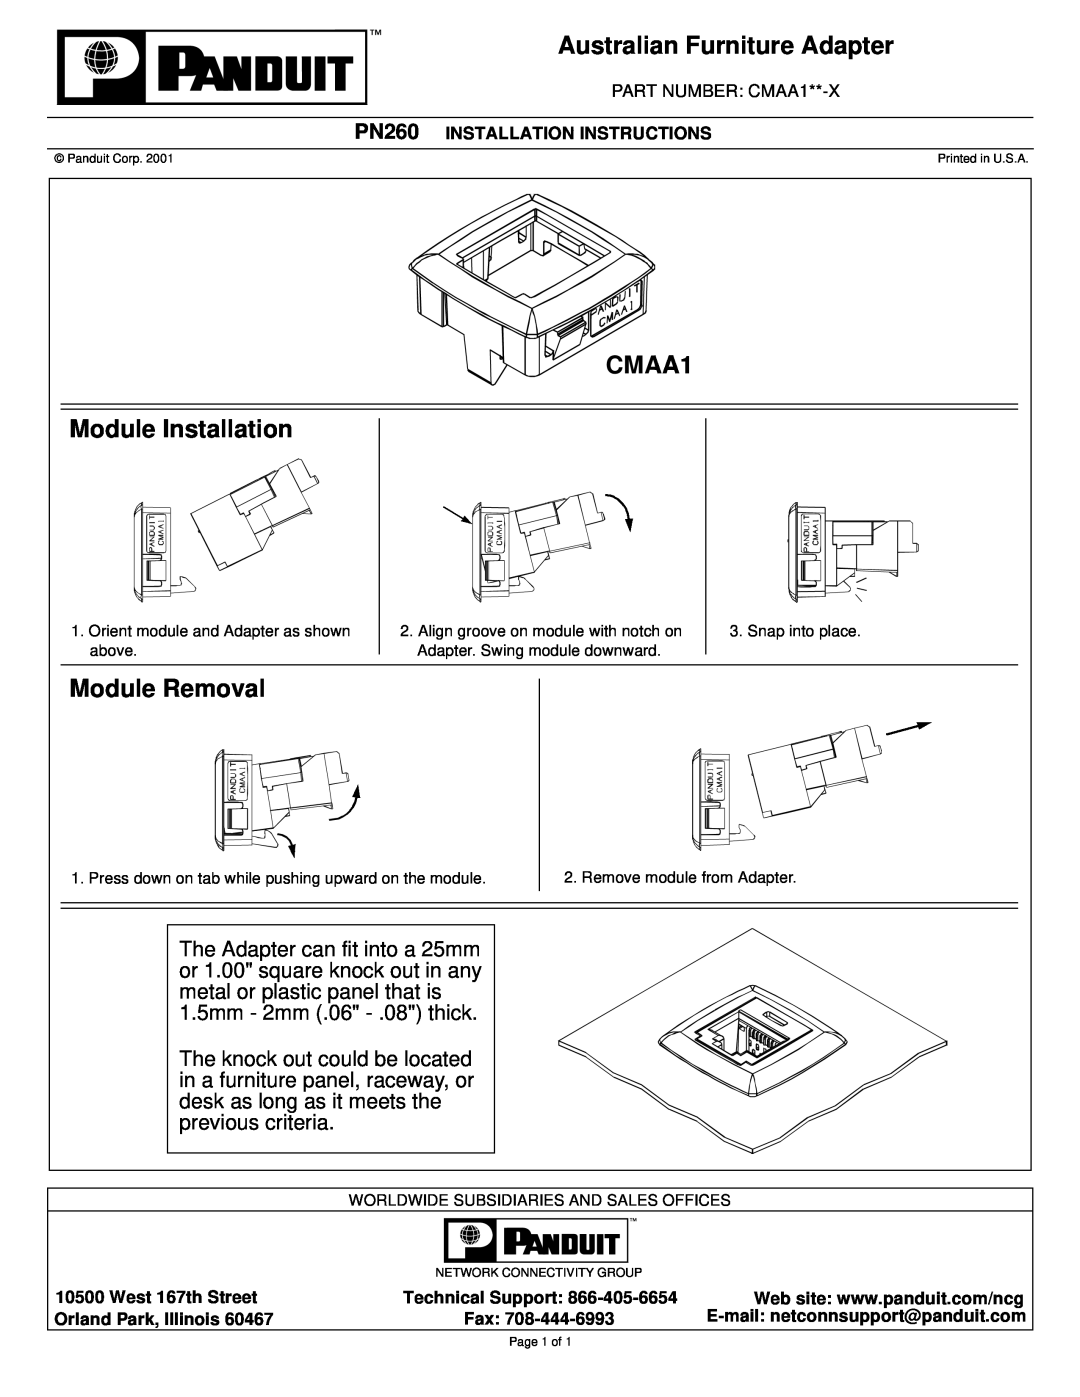 Panduit PN260 installation instructions Australian Furniture Adapter, CMAA1 Module Installation, Module Removal 